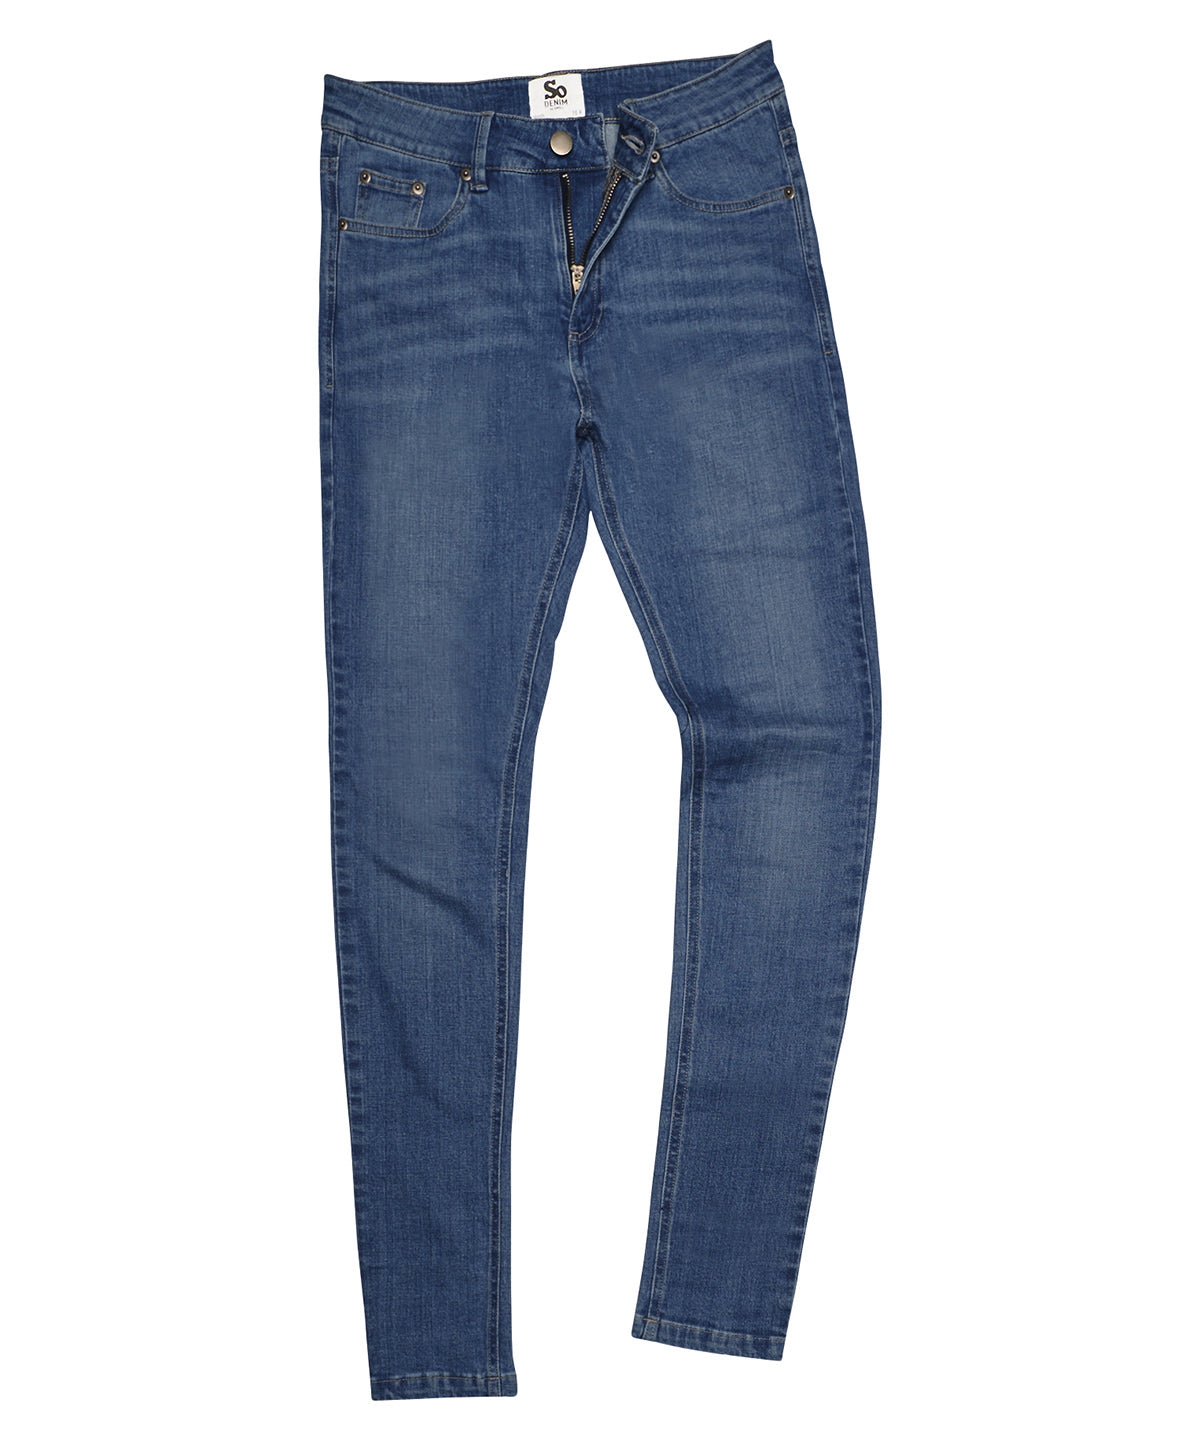 Buxur - Women's Lara Skinny Jeans